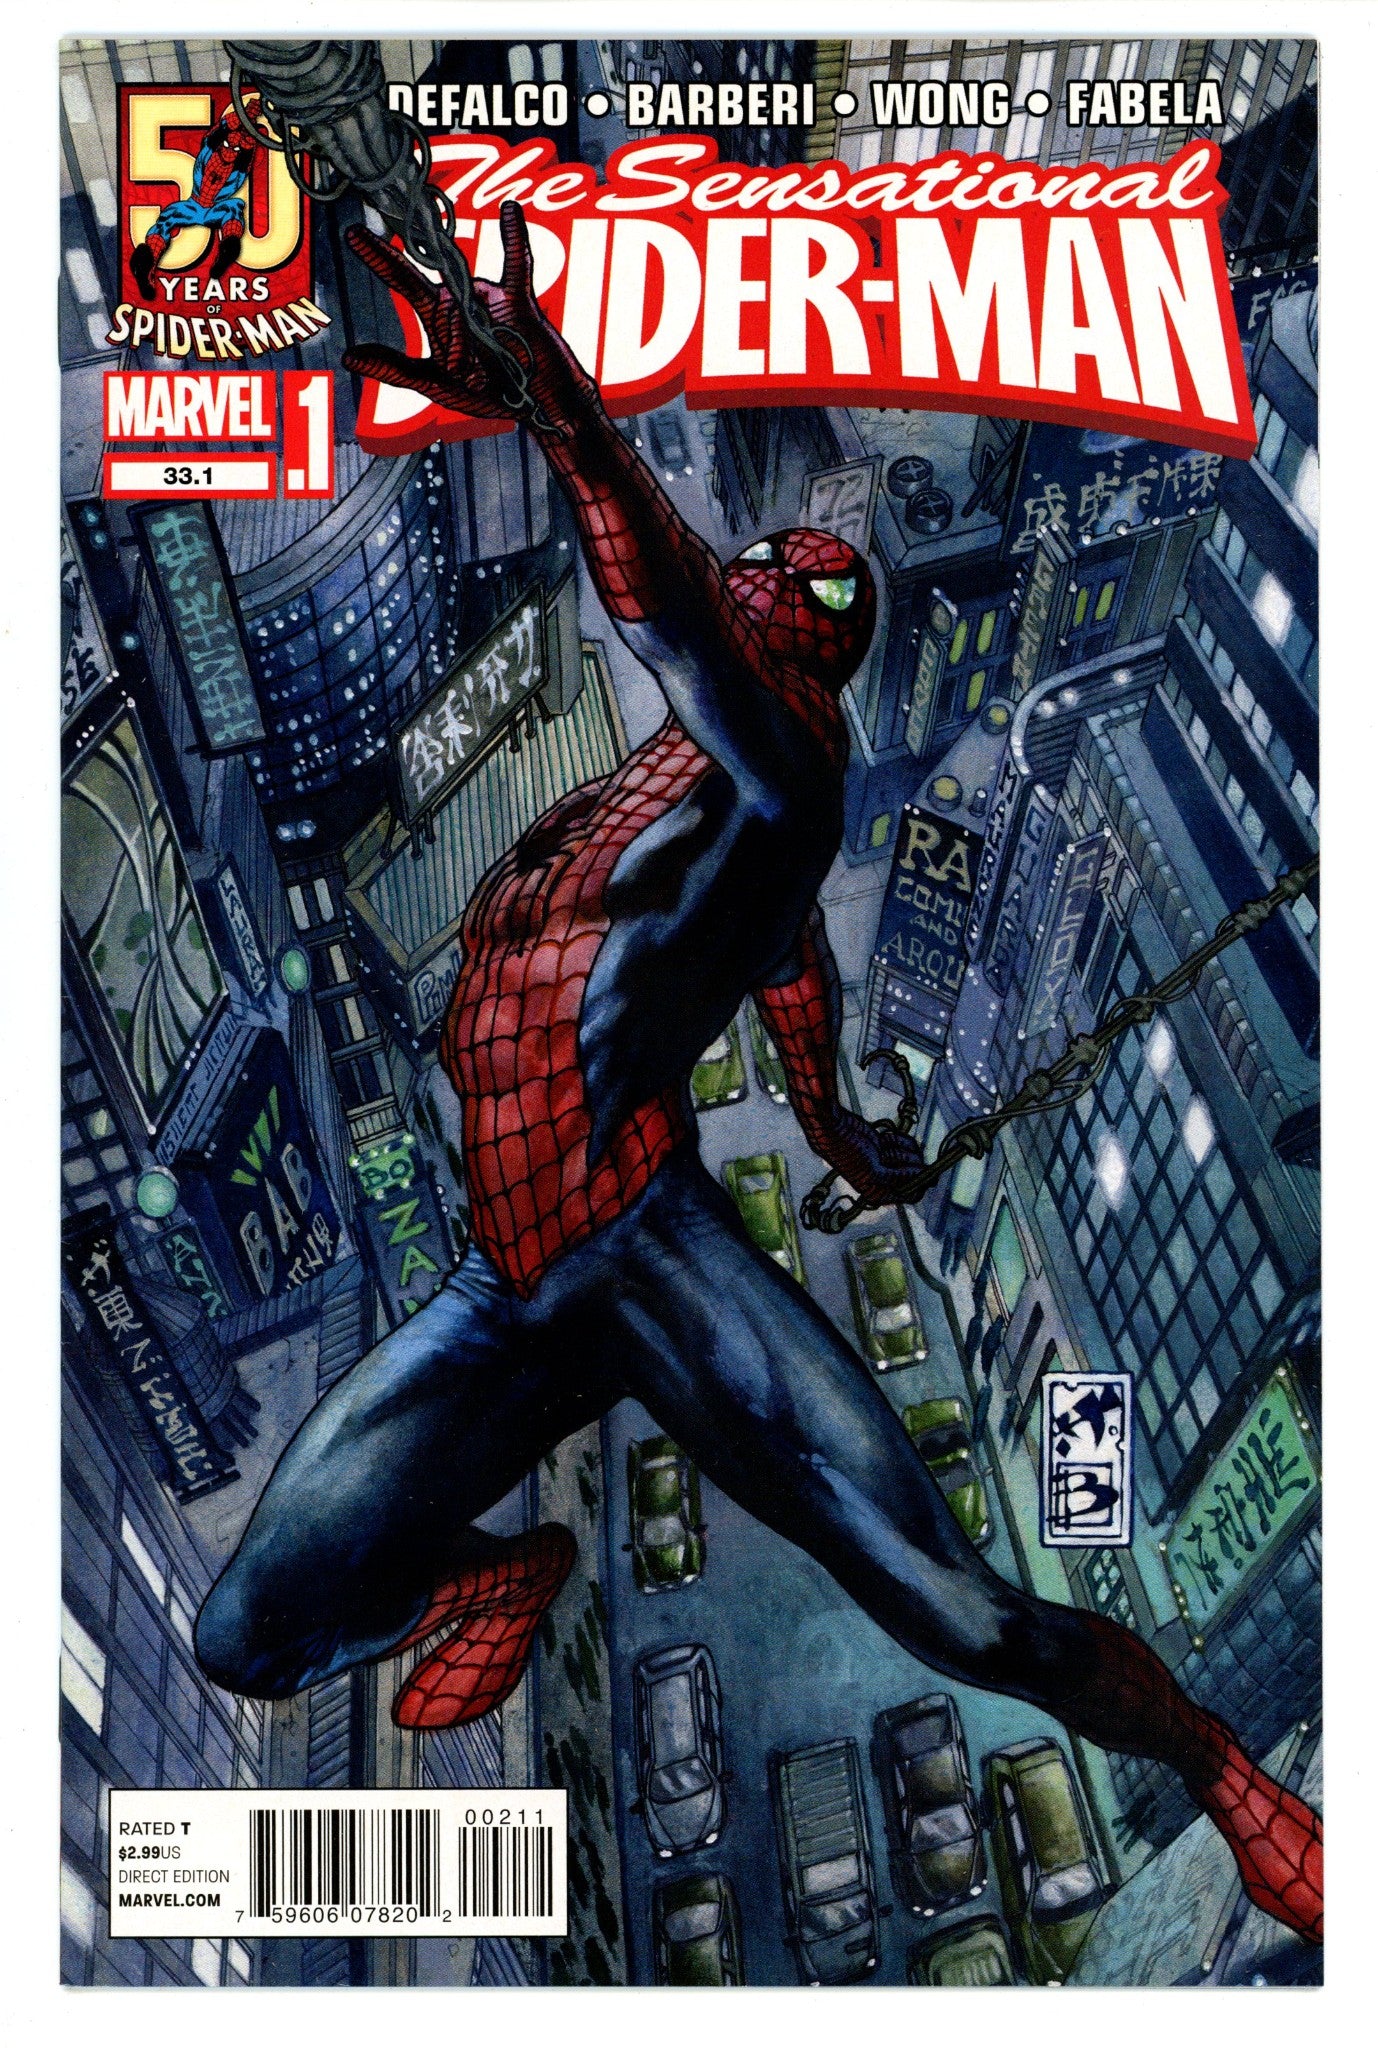 Sensational Spider-Man Vol 2 33.1High Grade(2012)